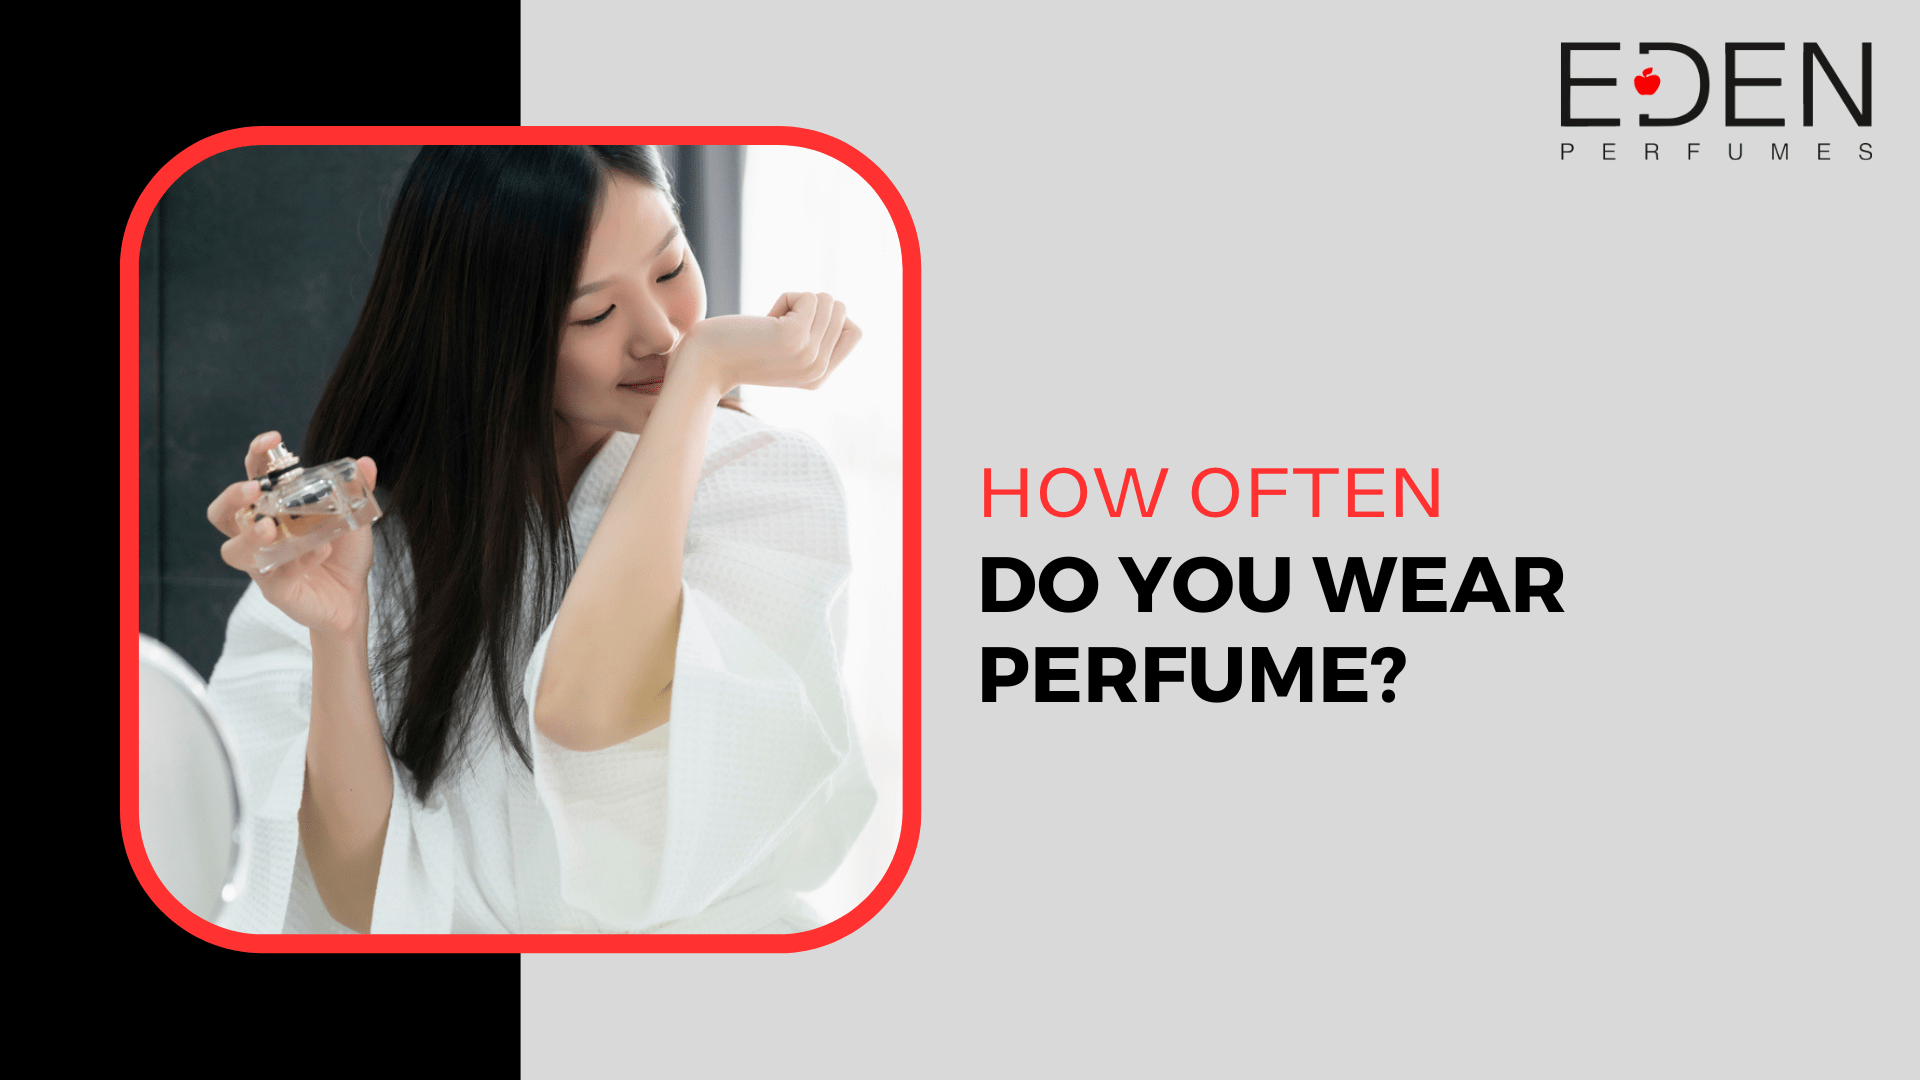 How often do you wear perfume?